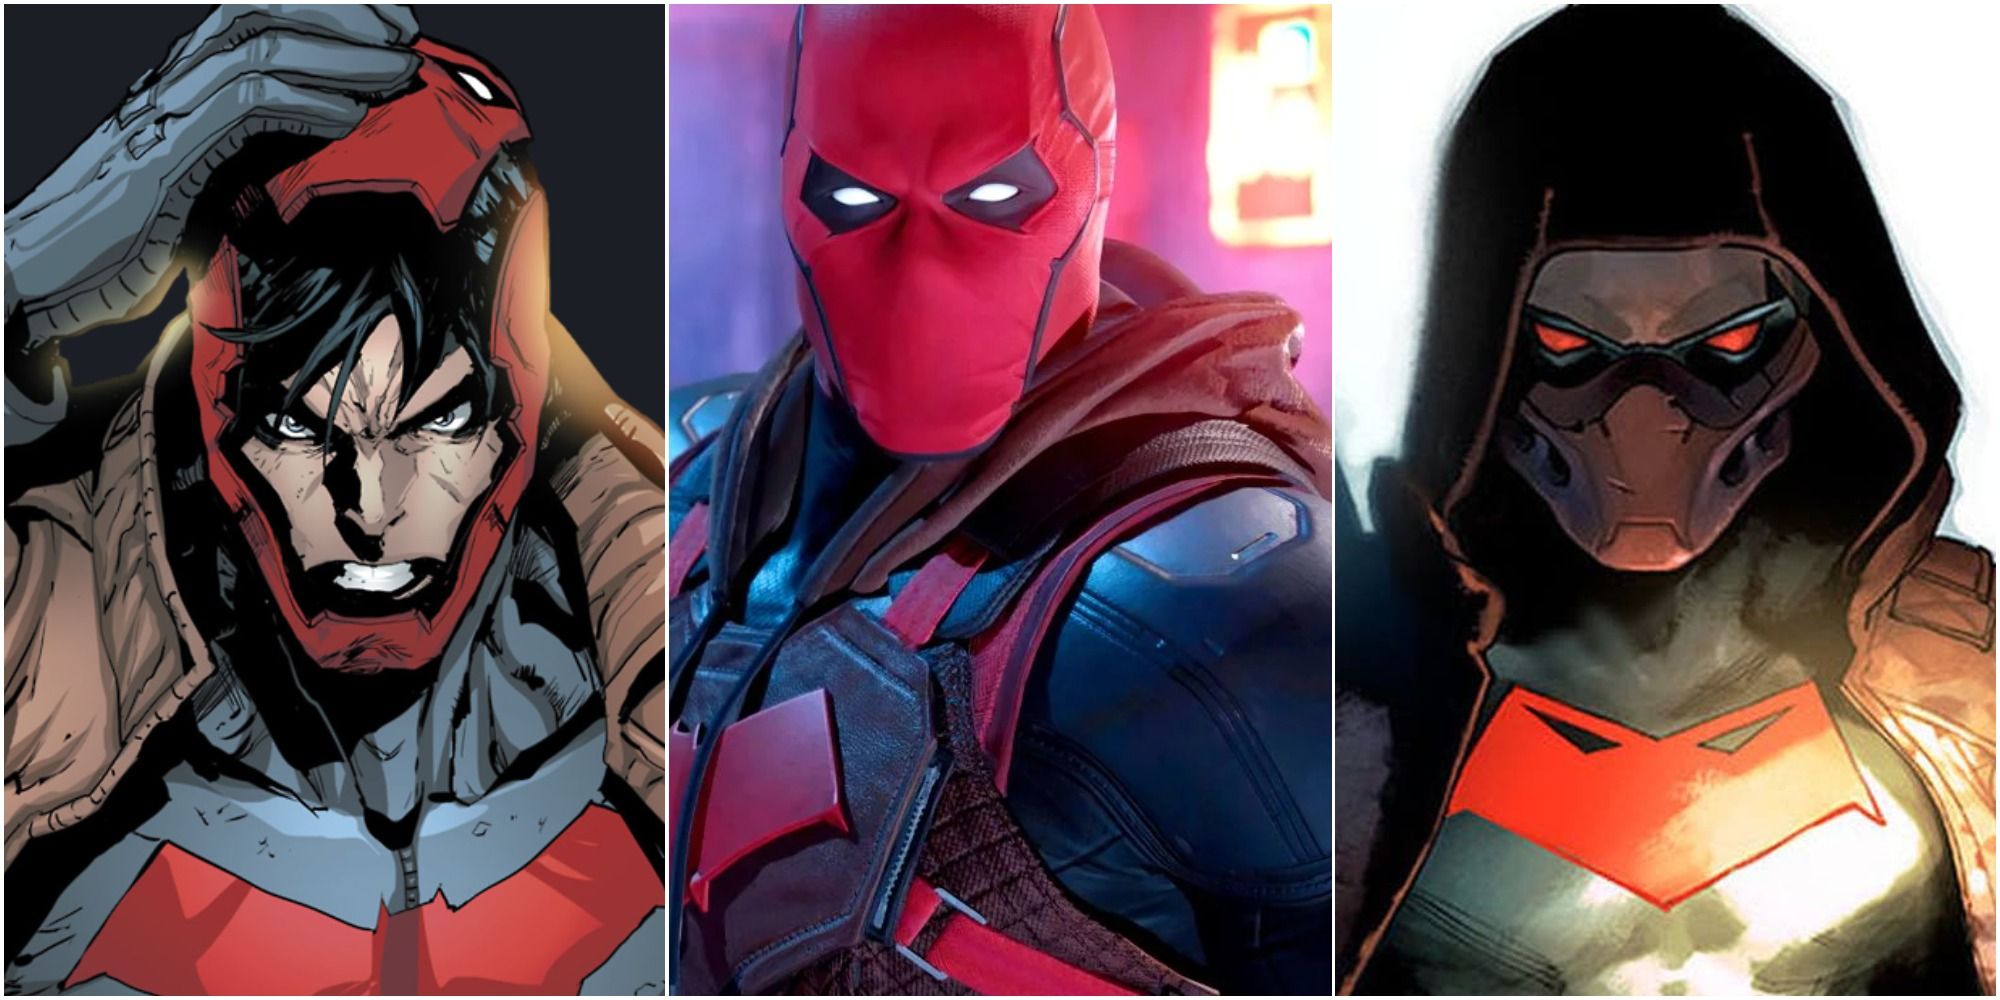 Red X's Identity Finally Revealed by DC